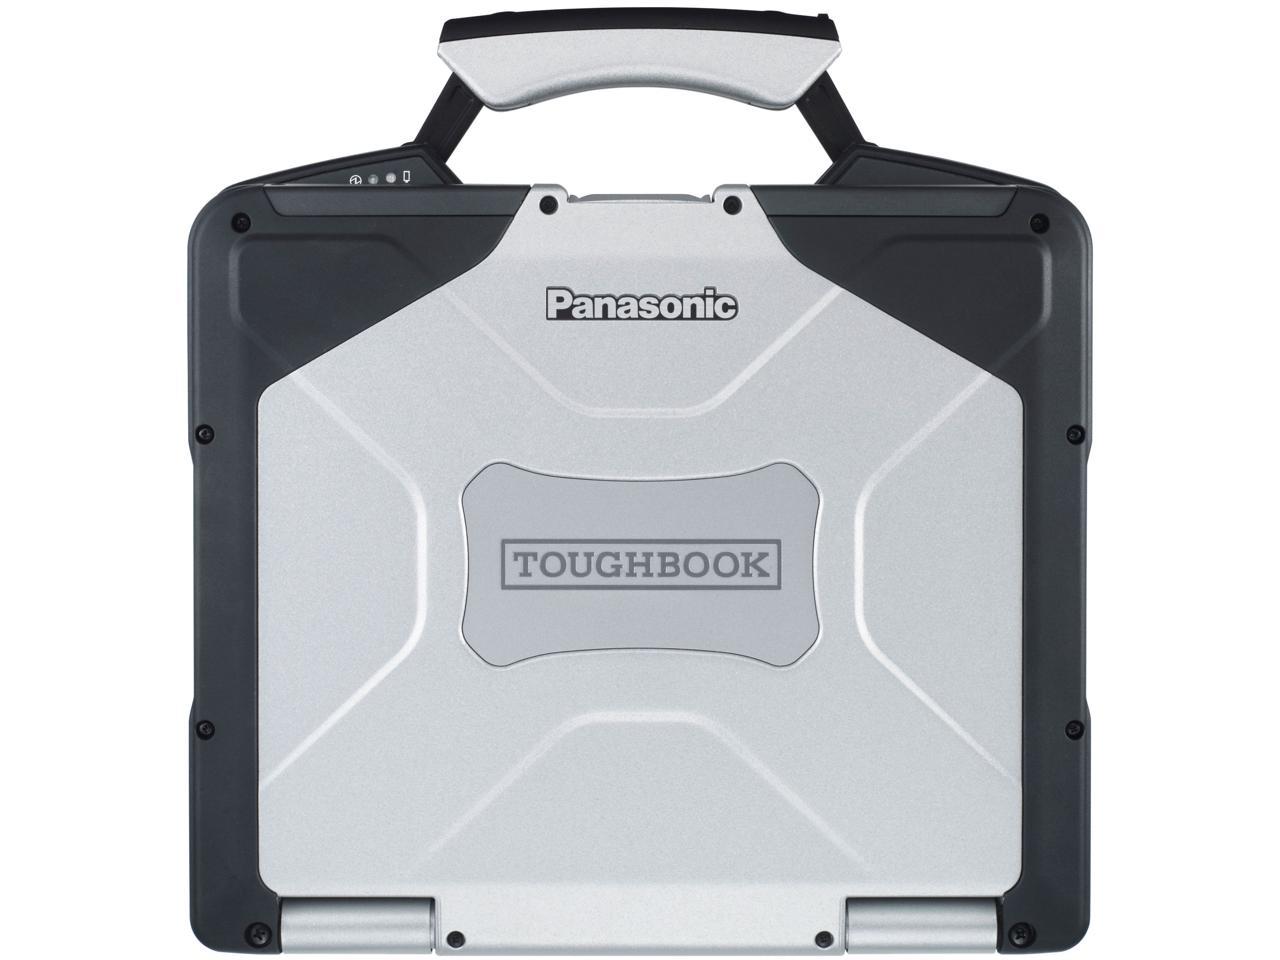 Panasonic Toughbook CF-31 MK5, Rugged Laptop - PC, 13.1